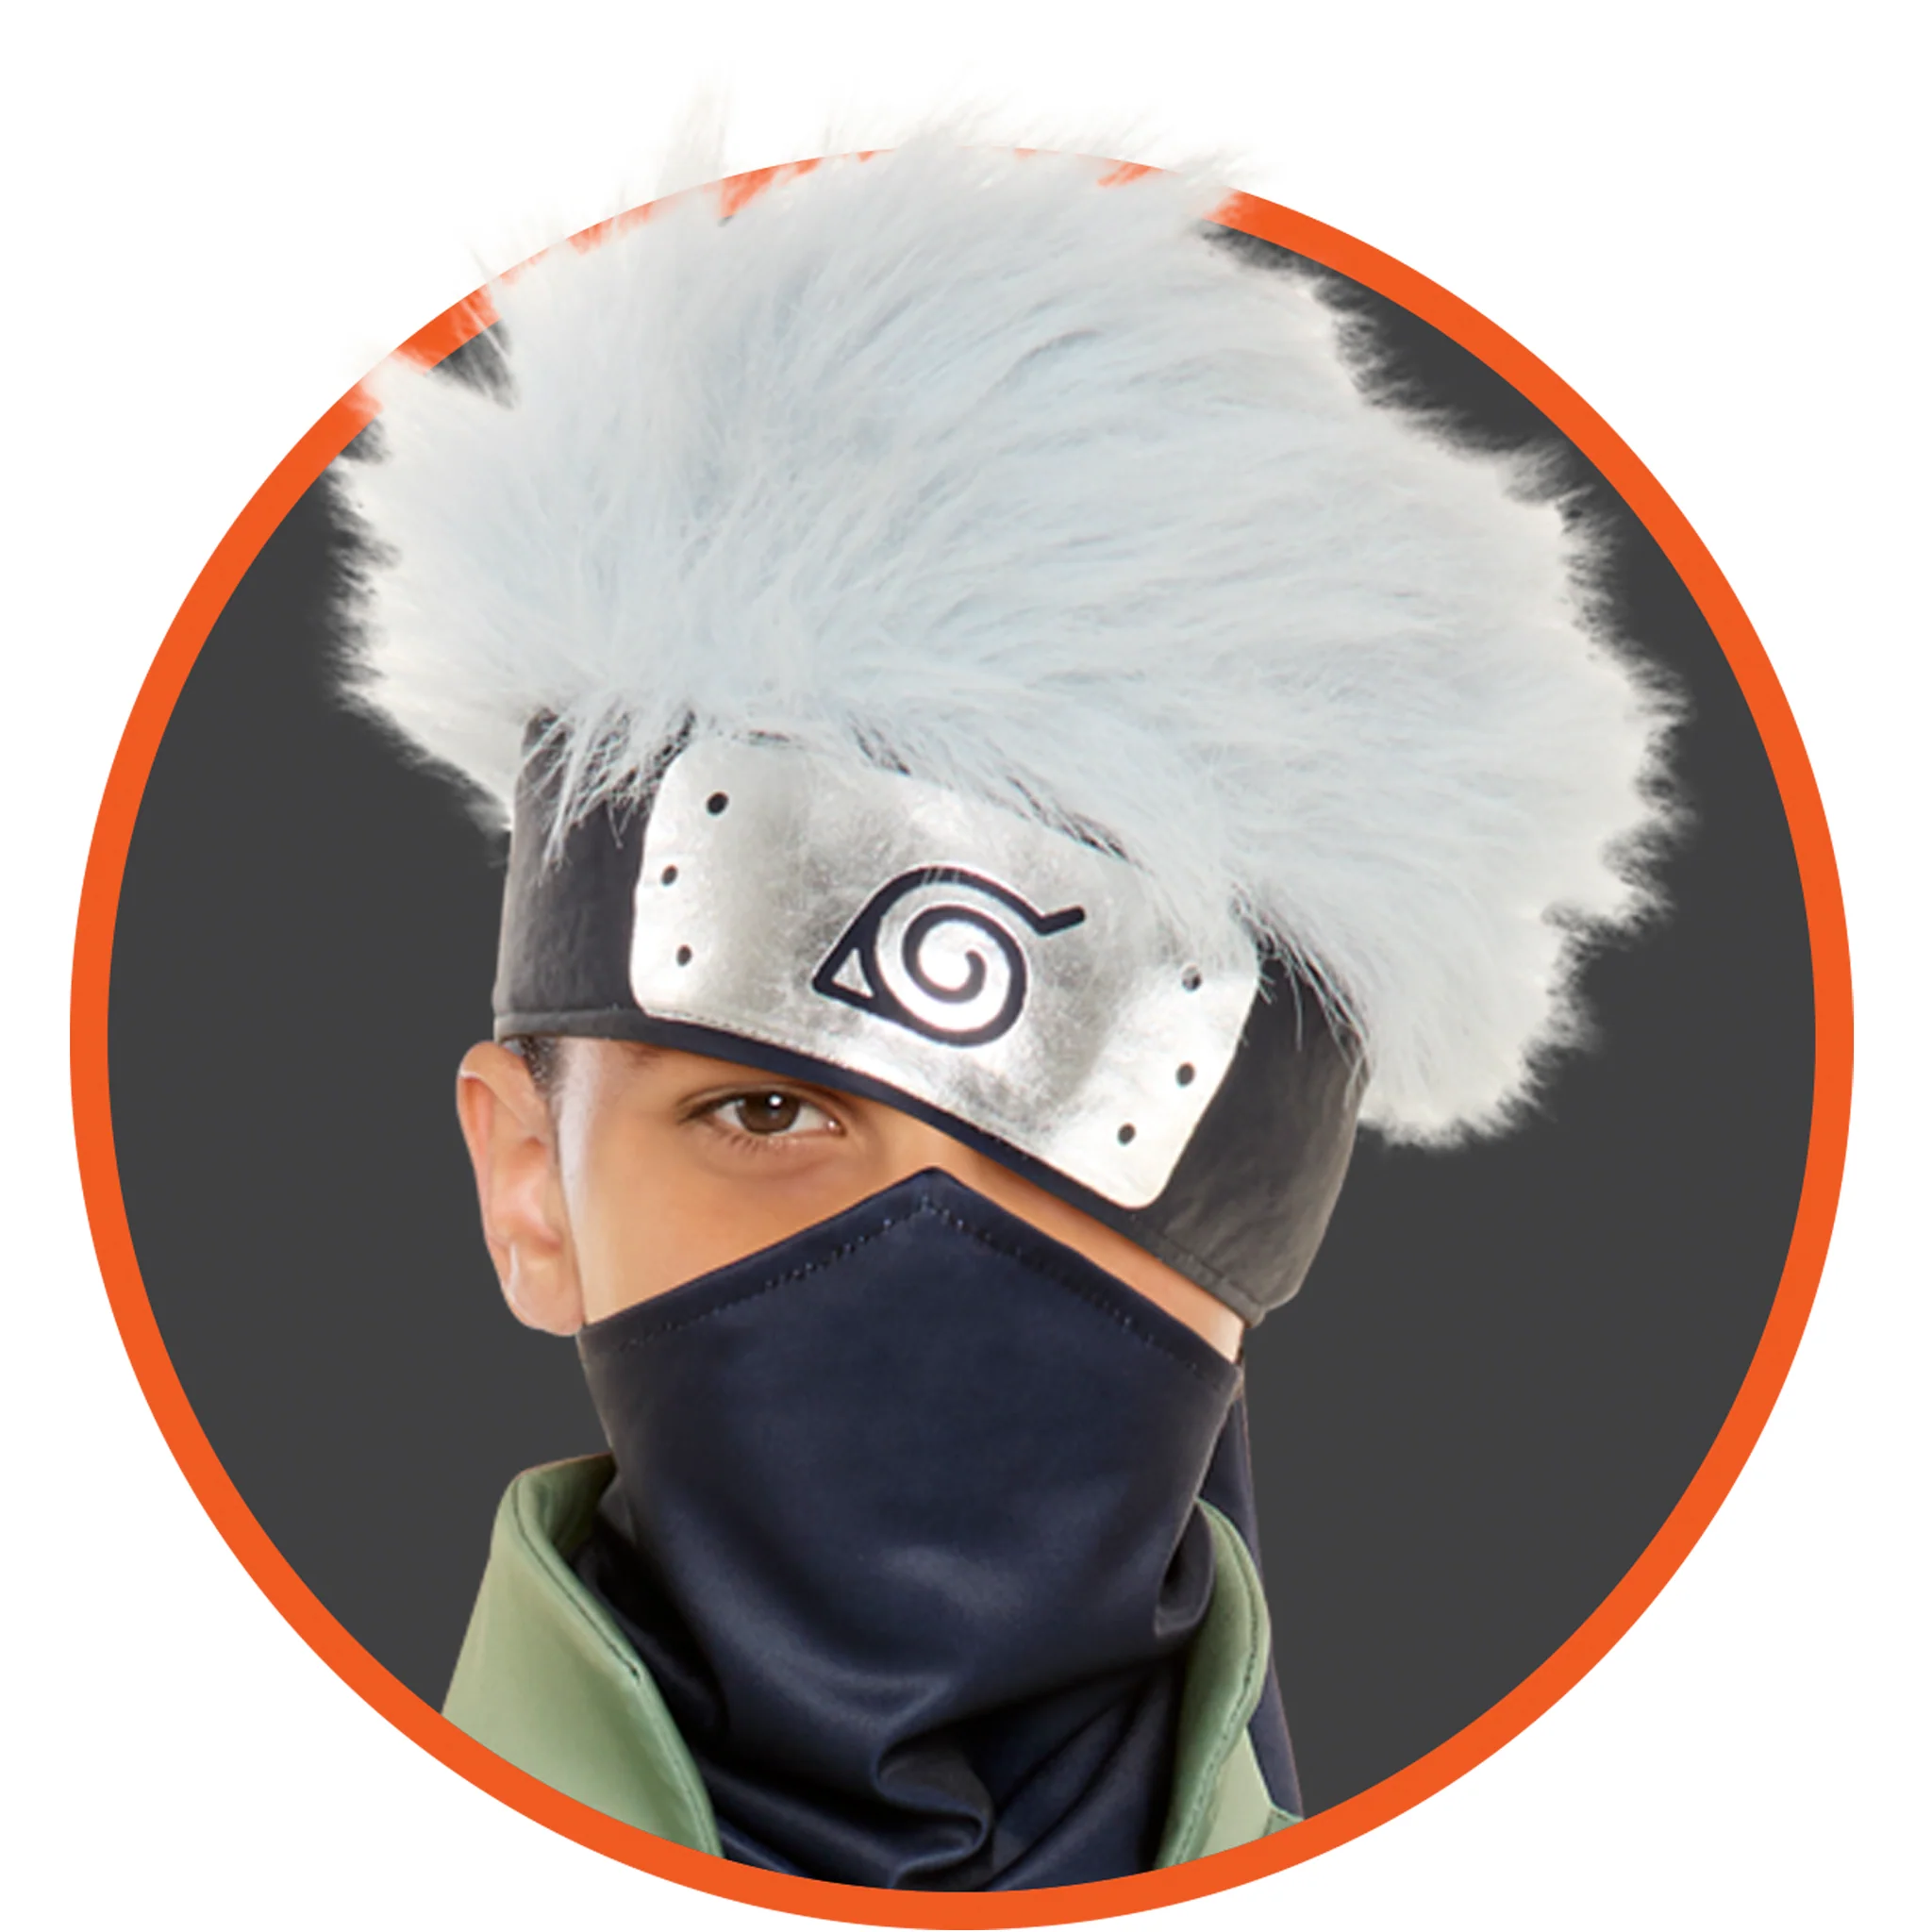 Naruto Kakashi Child Costume Kit, Large